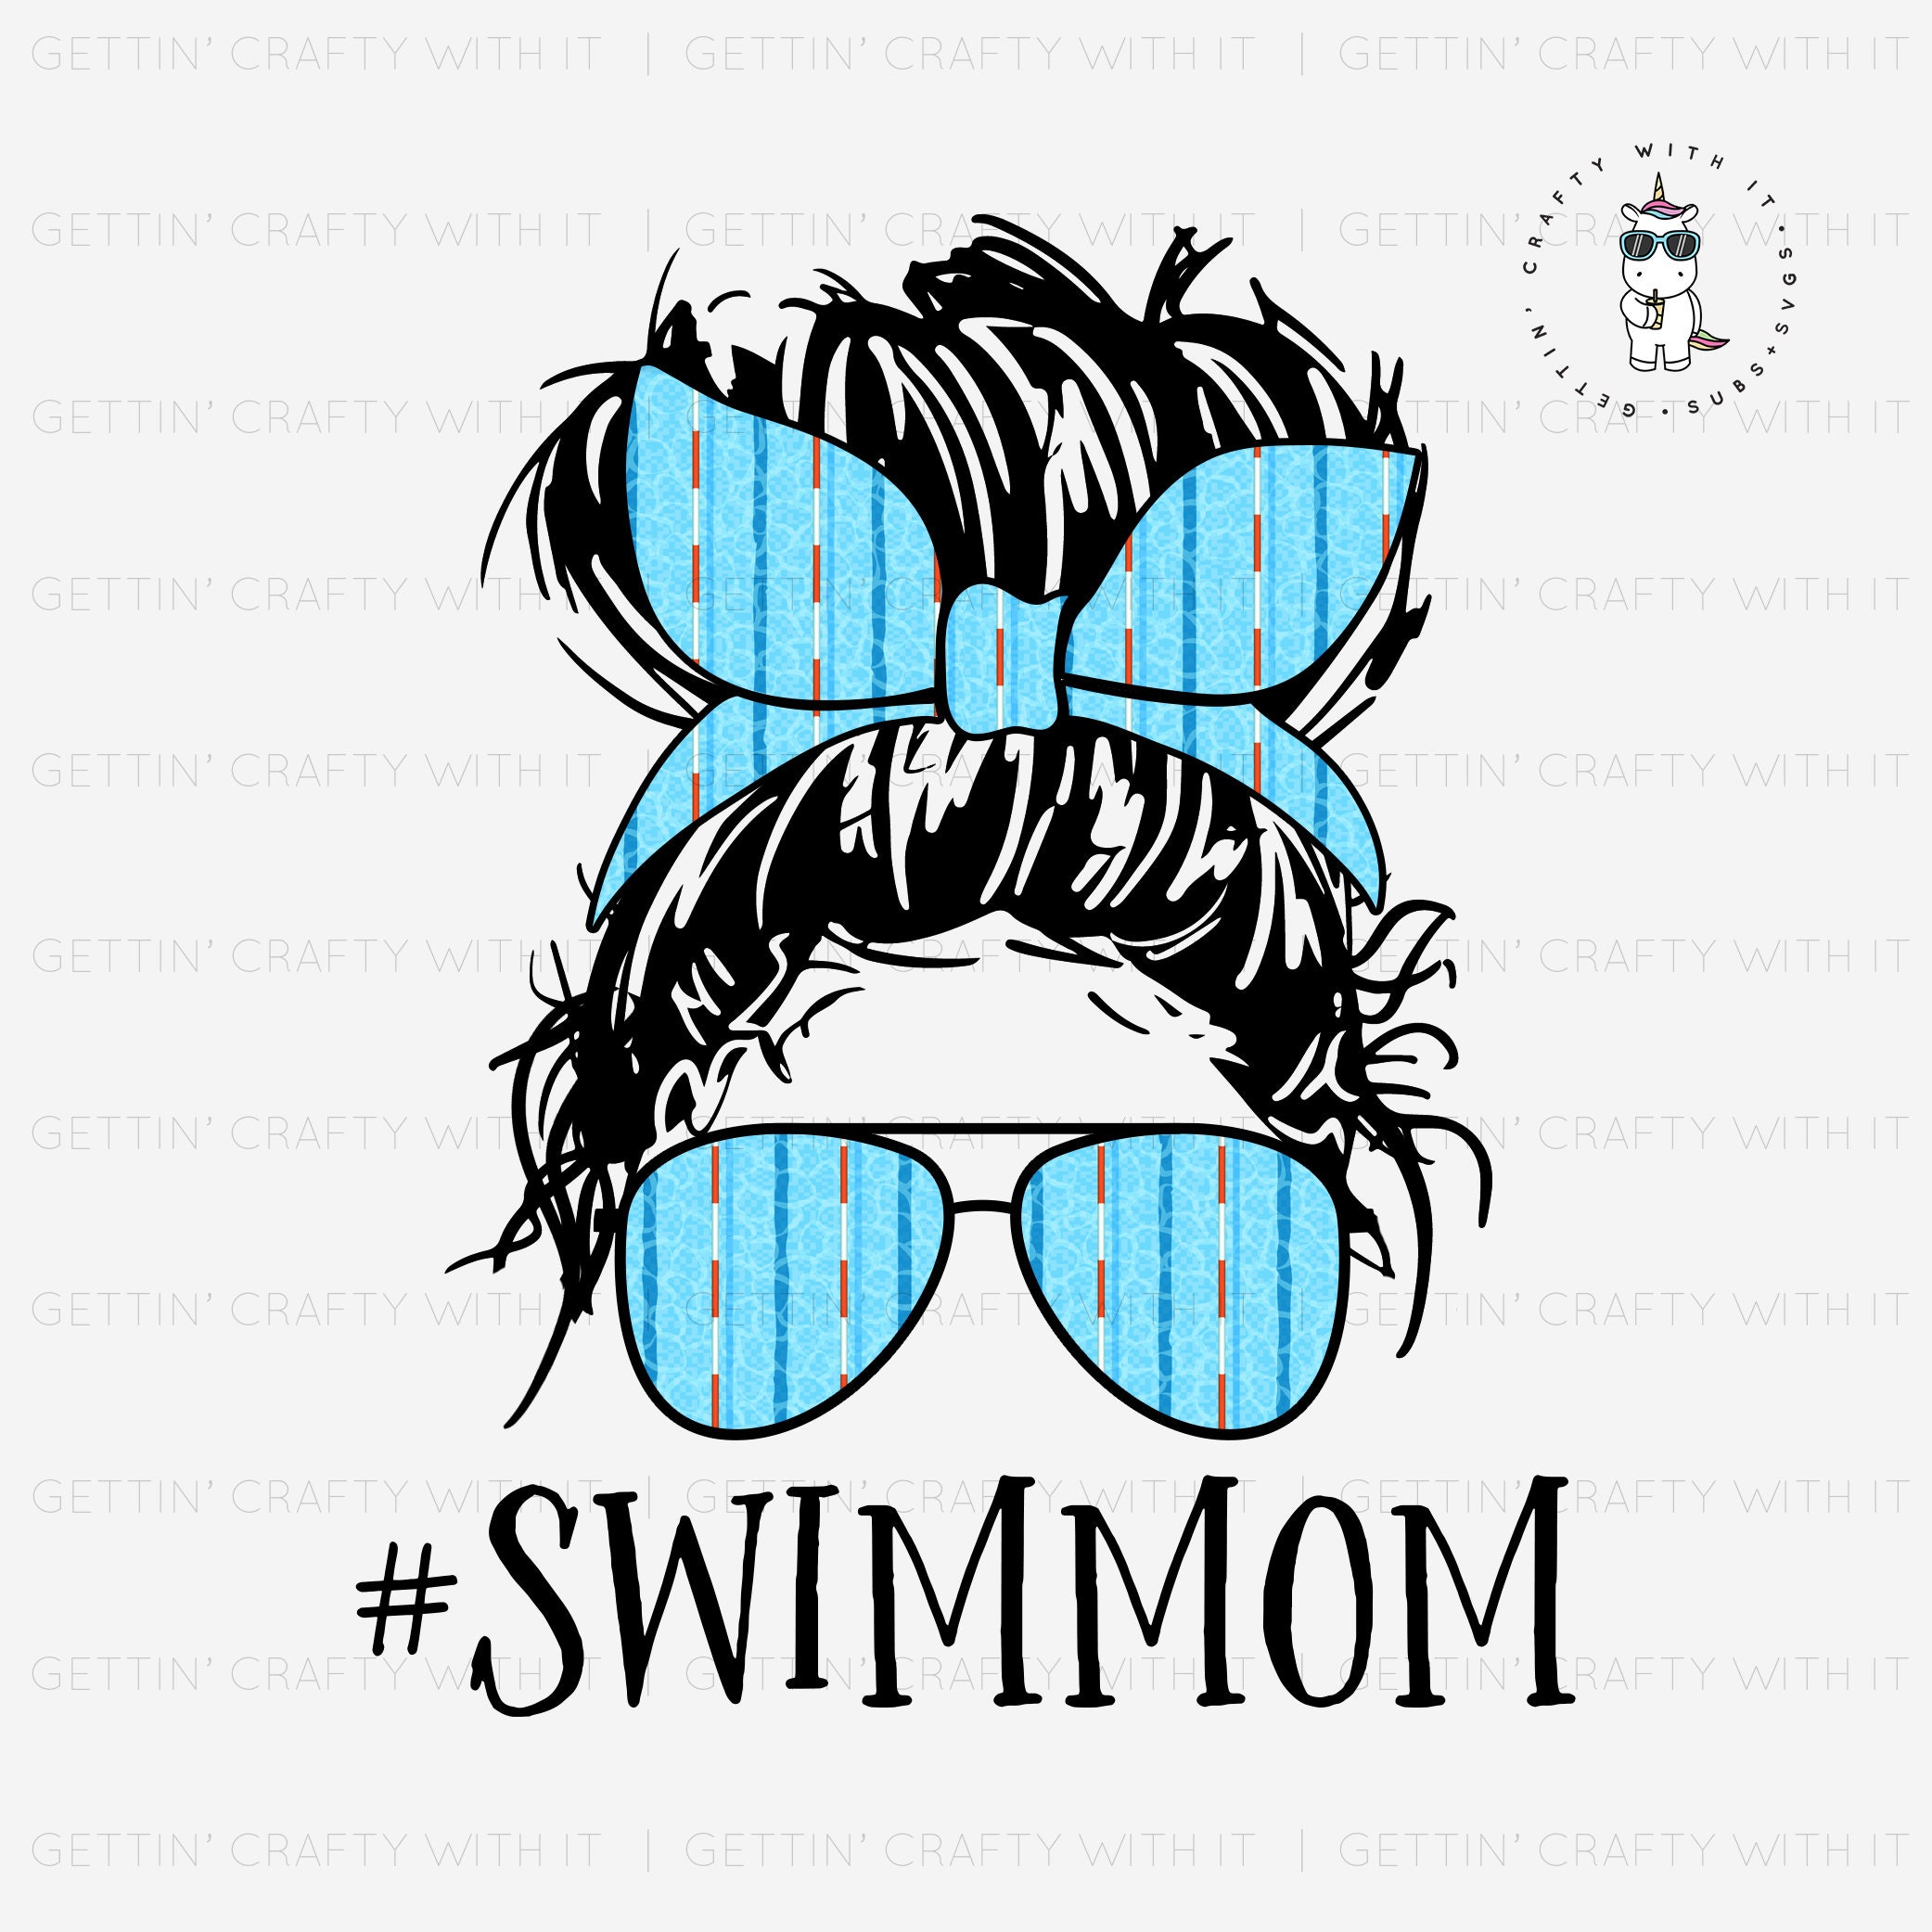 Swim mom sublimation transfer ready to press